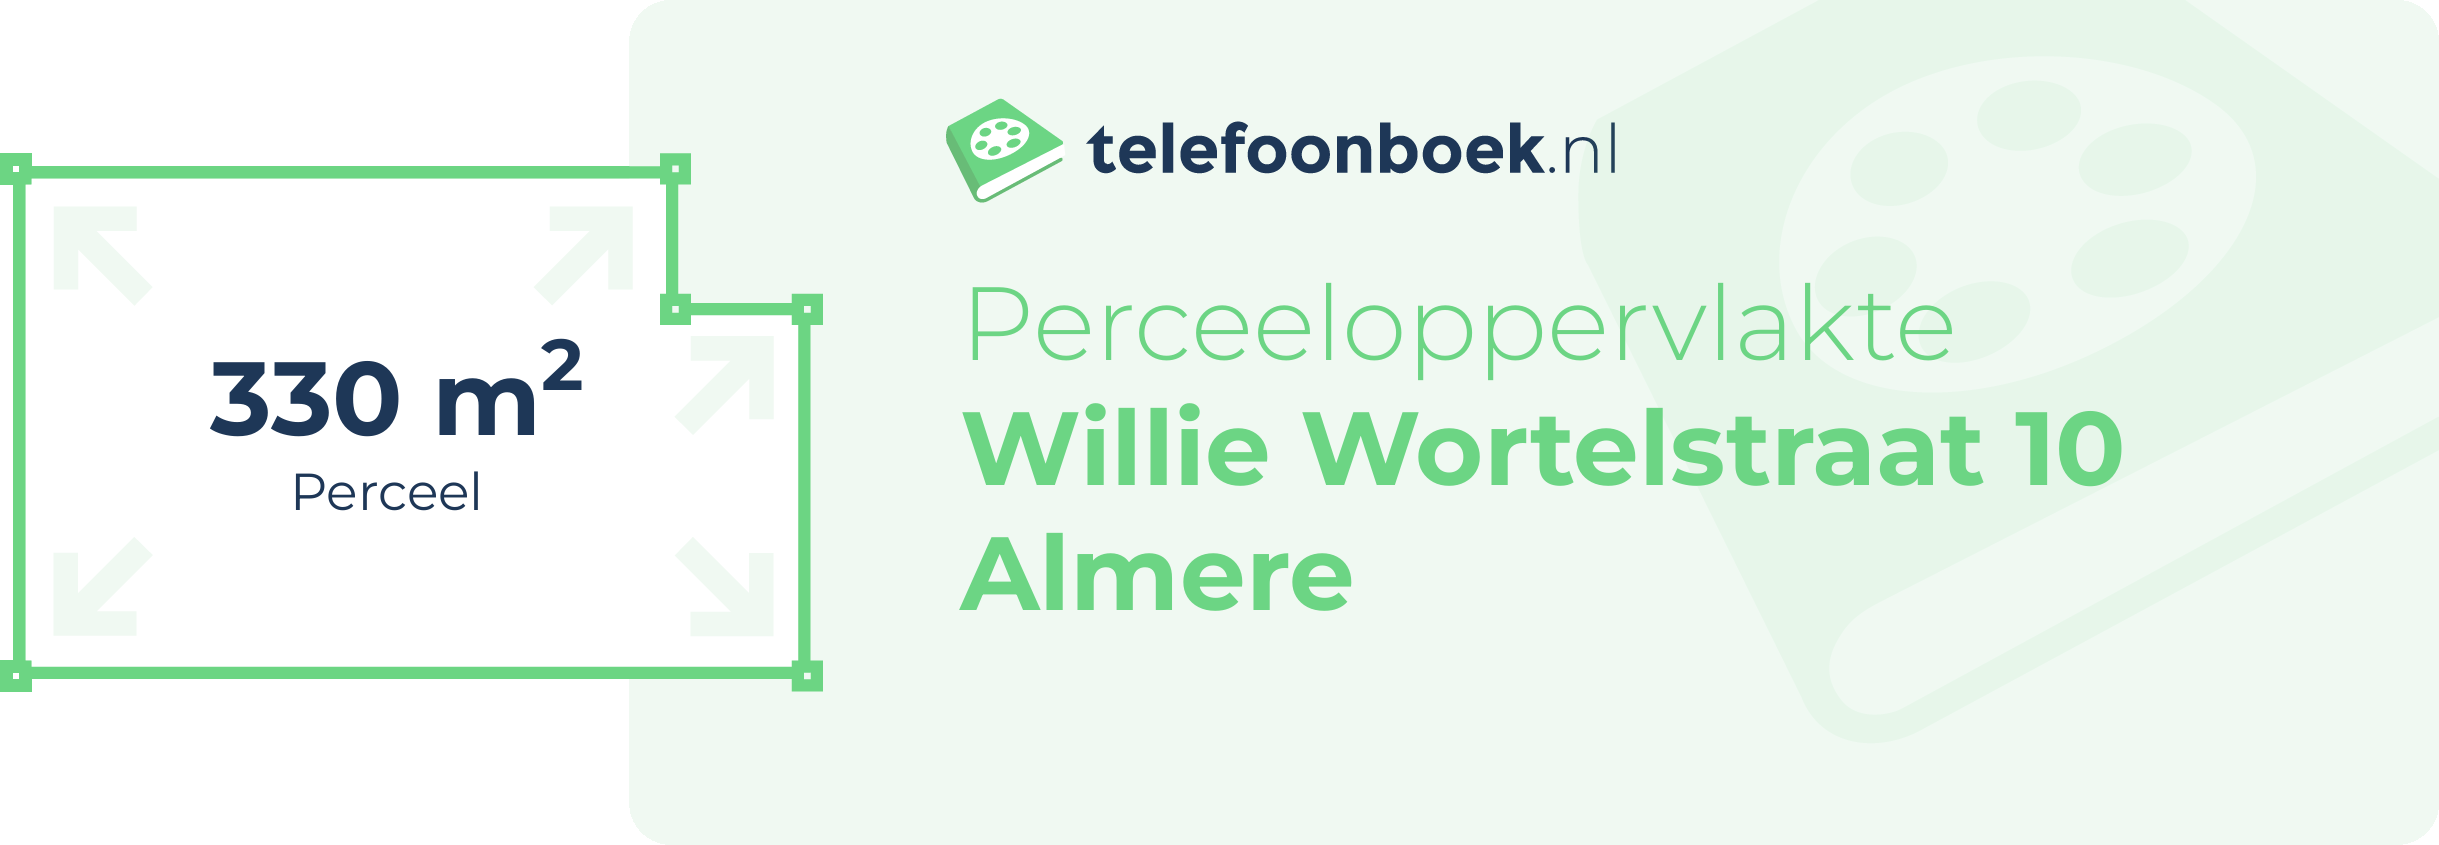 Perceeloppervlakte Willie Wortelstraat 10 Almere